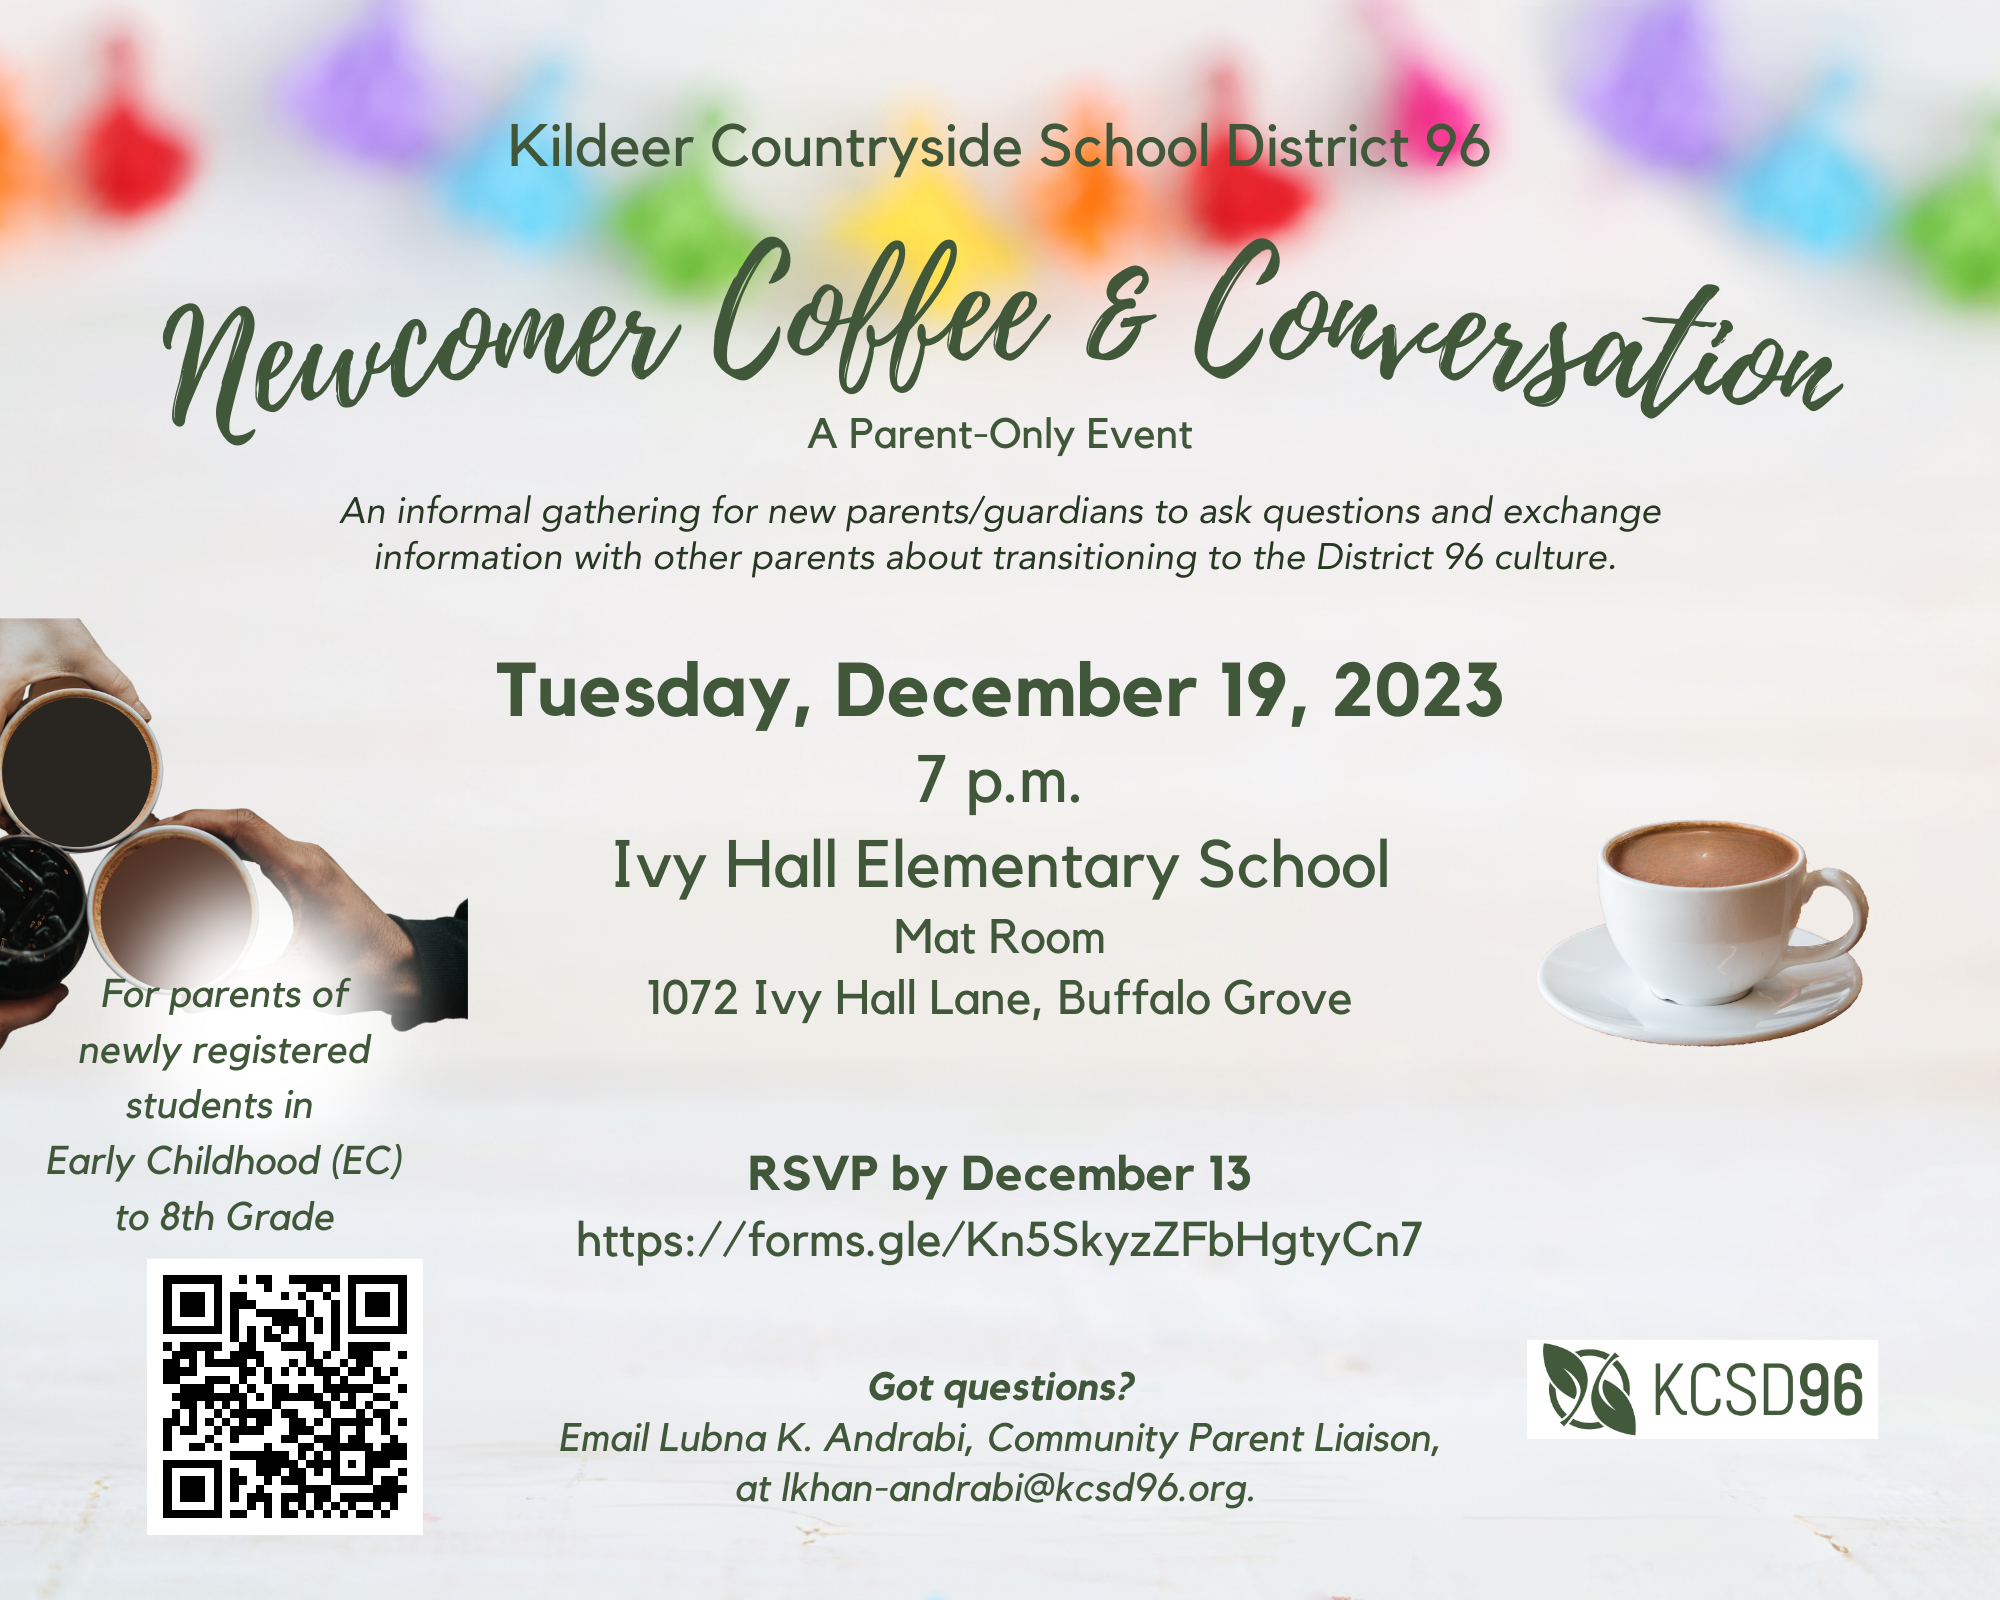 Newcomer Coffee & Conversation on December 19, 2023